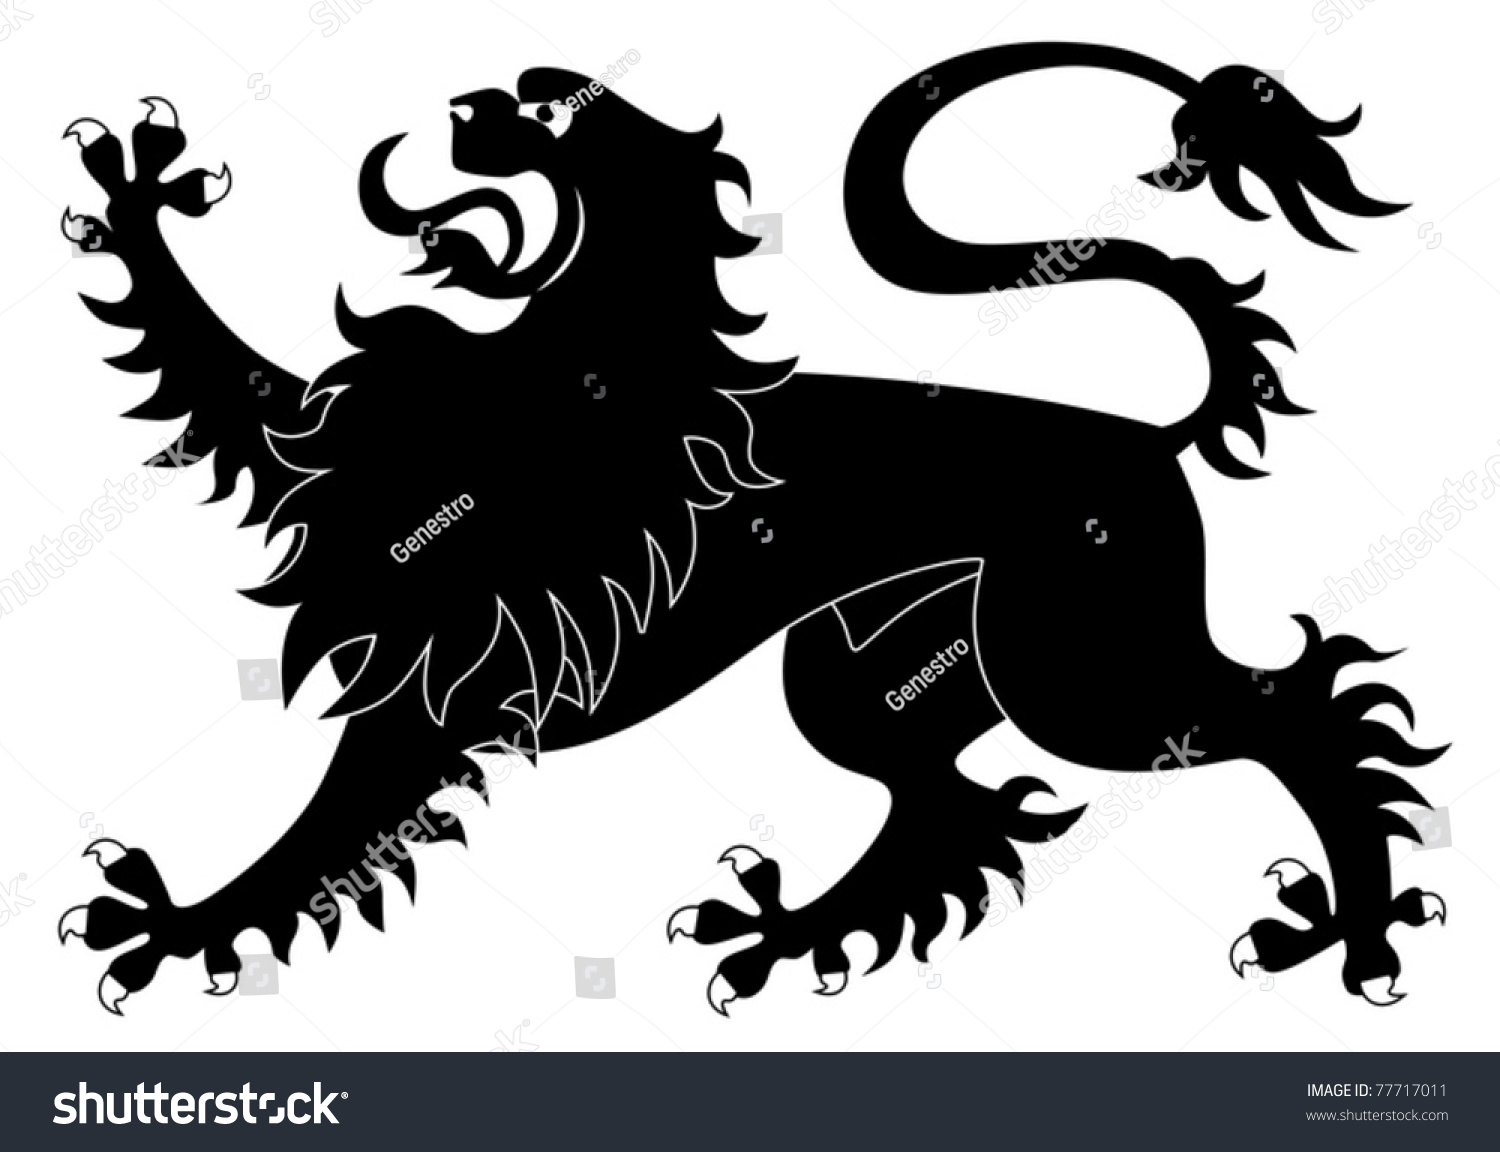 Silhouette Of Heraldic Lion #2 Stock Vector Illustration 77717011 ...